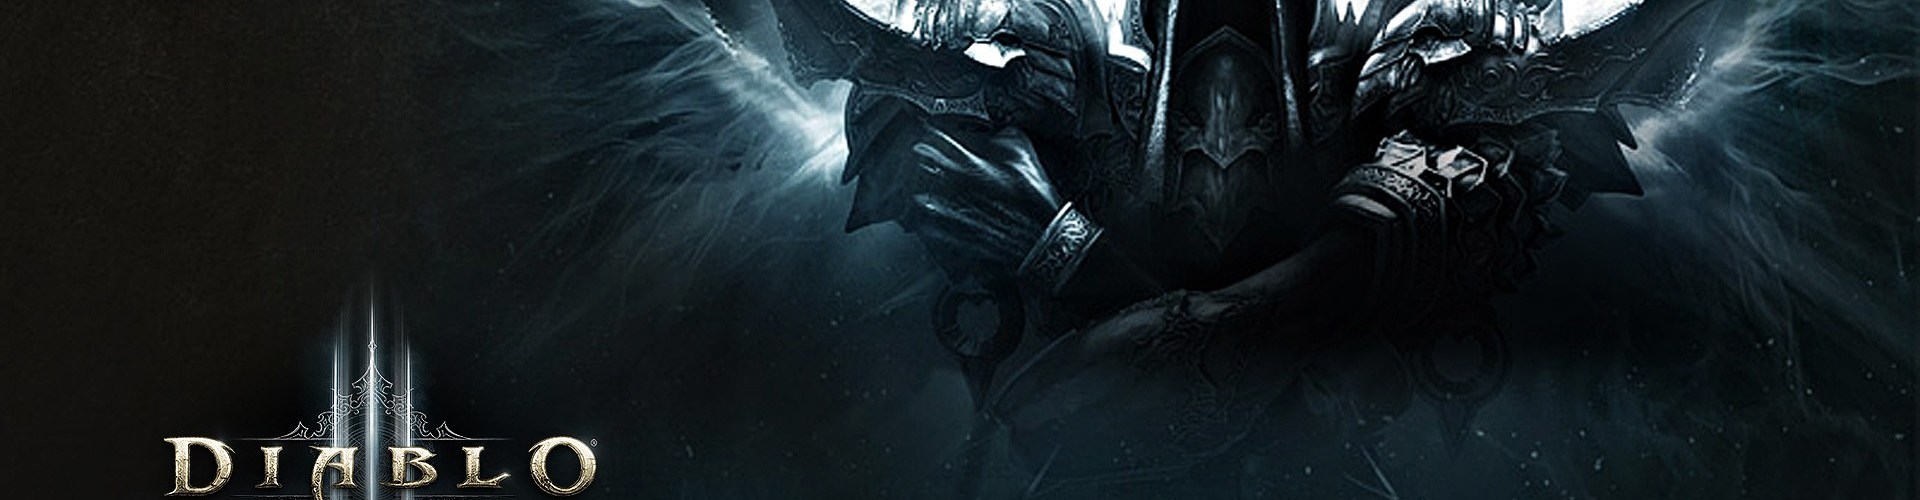 Diablo 3 reaper of soul offline free download for pc full game